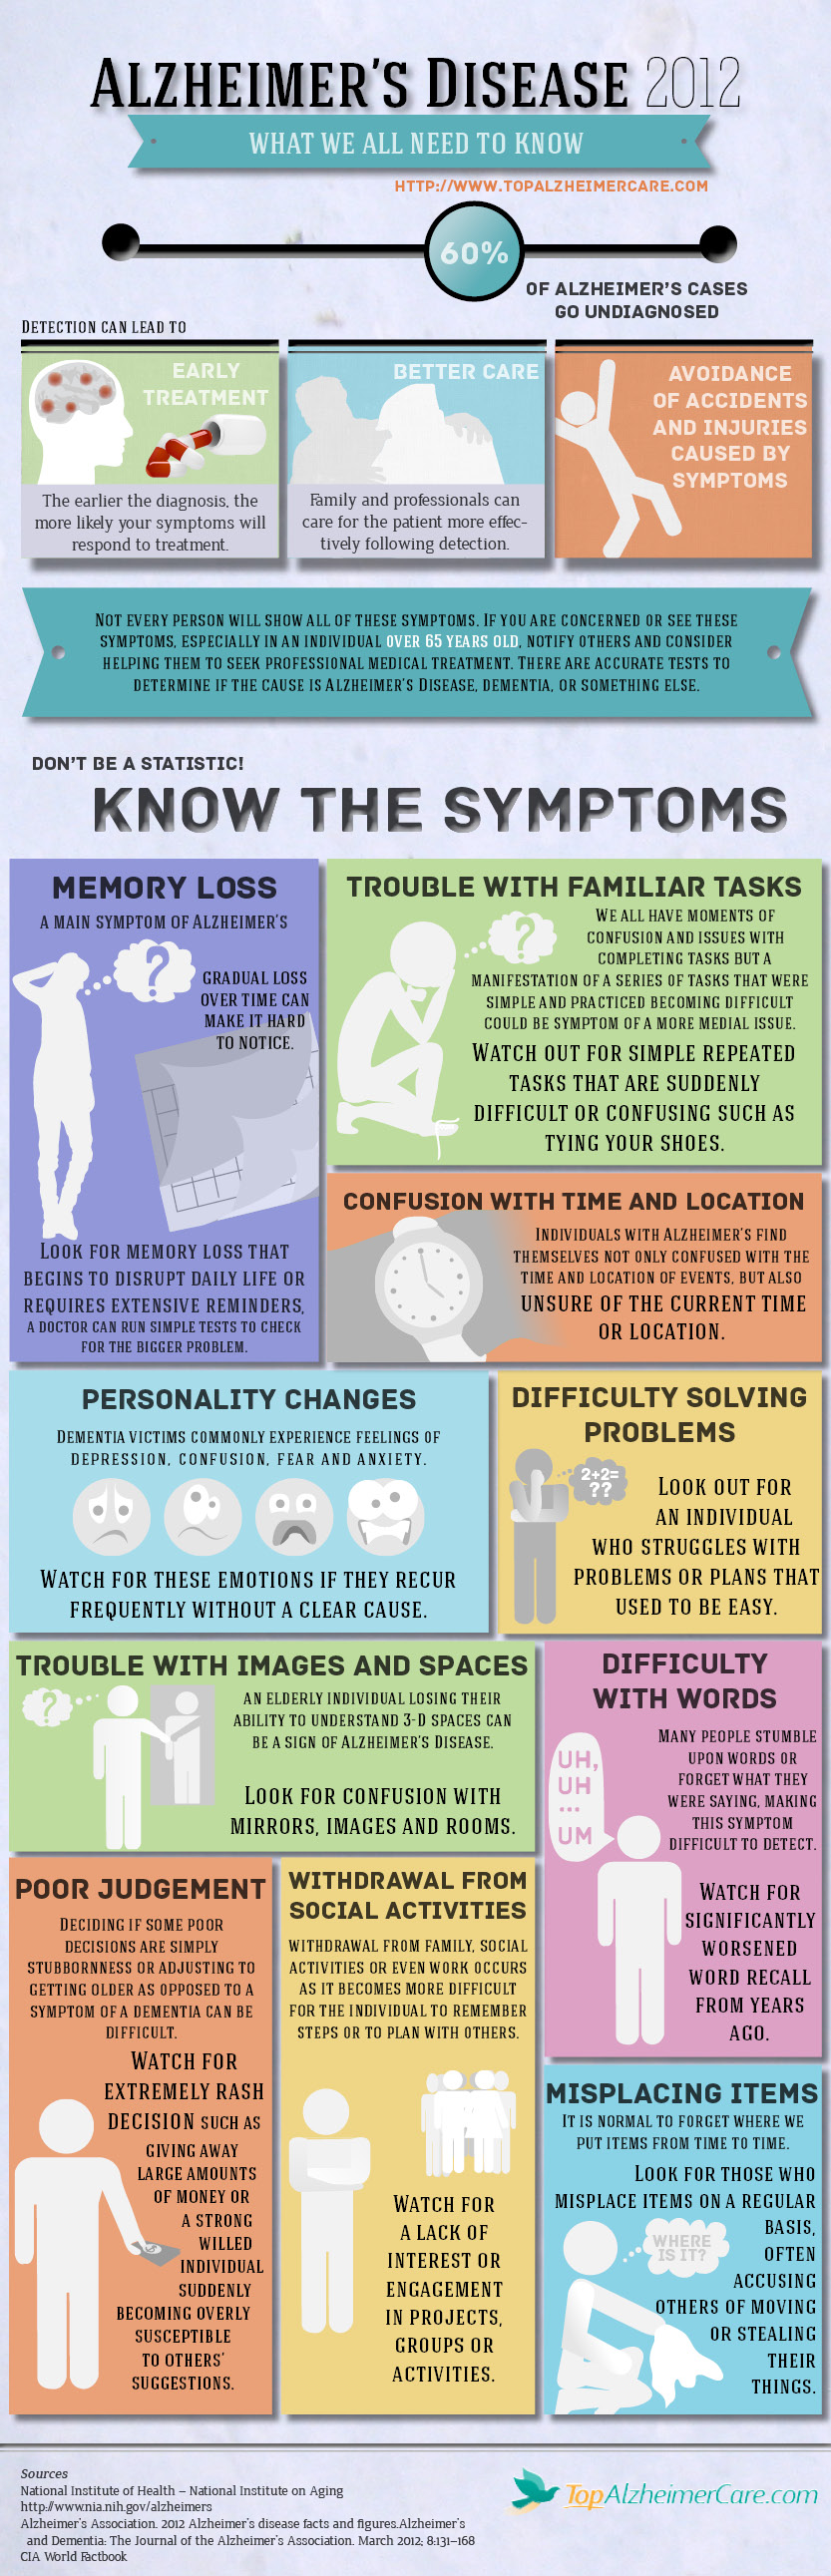 Symptoms Of Alzheimer s Disease